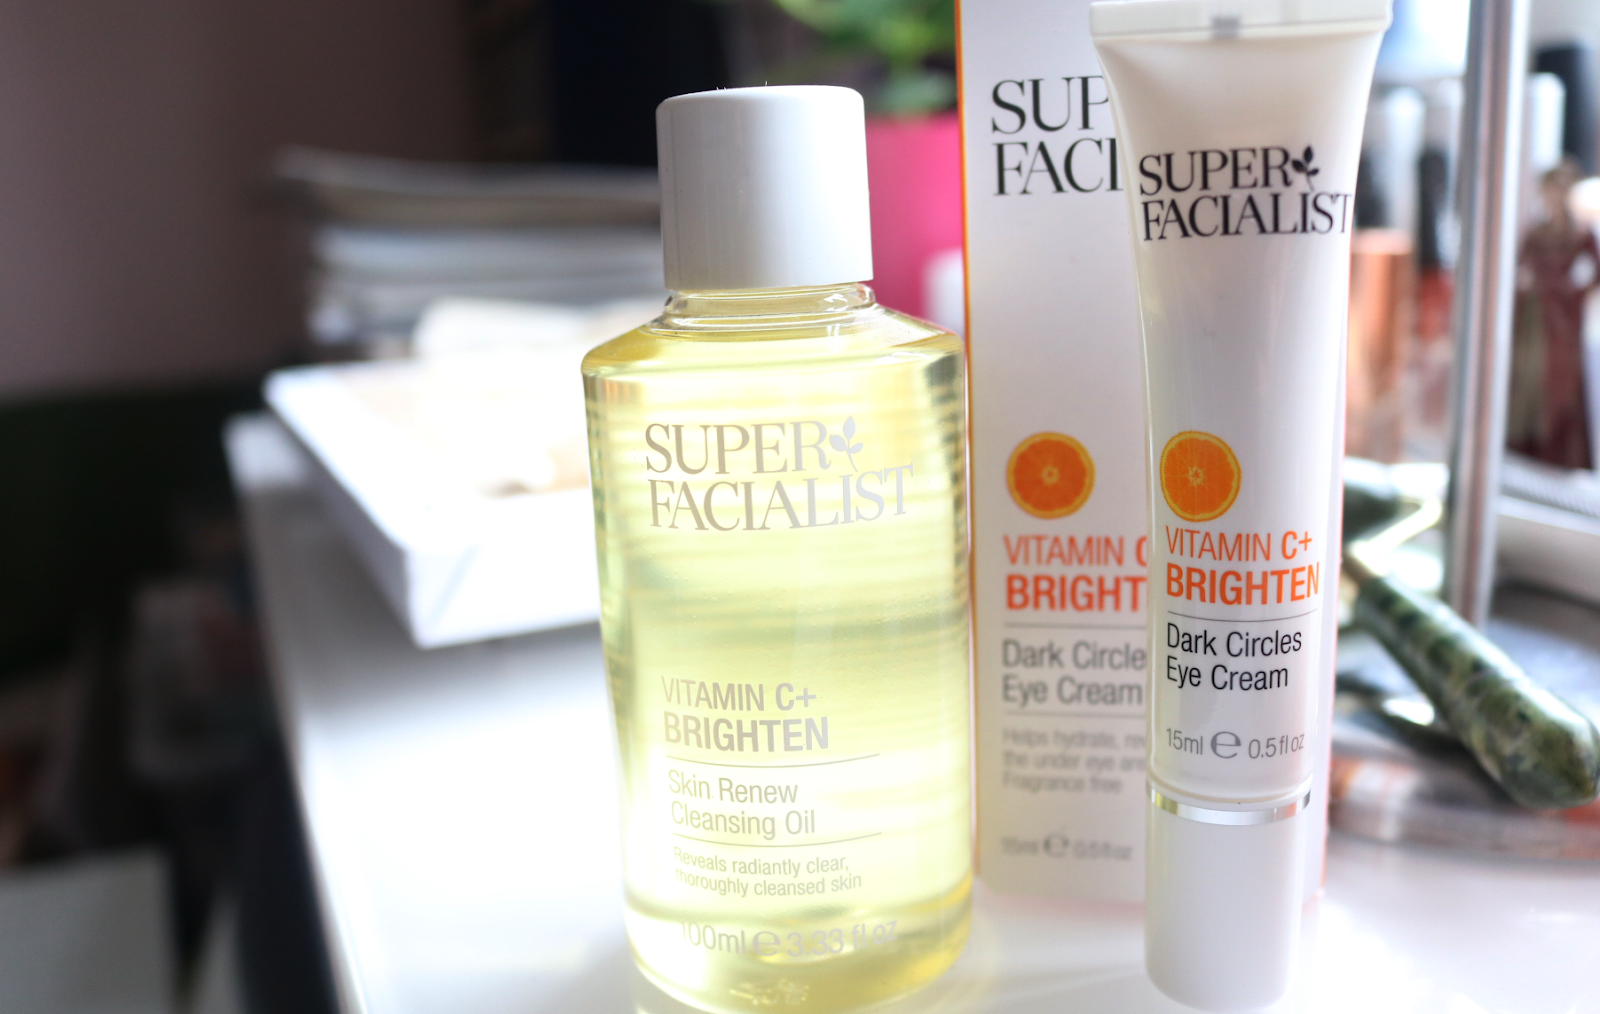 Super Facialist Vitamin C+ Brighten - Skin Renew Cleansing Oil, Dark Circles Eye Cream review